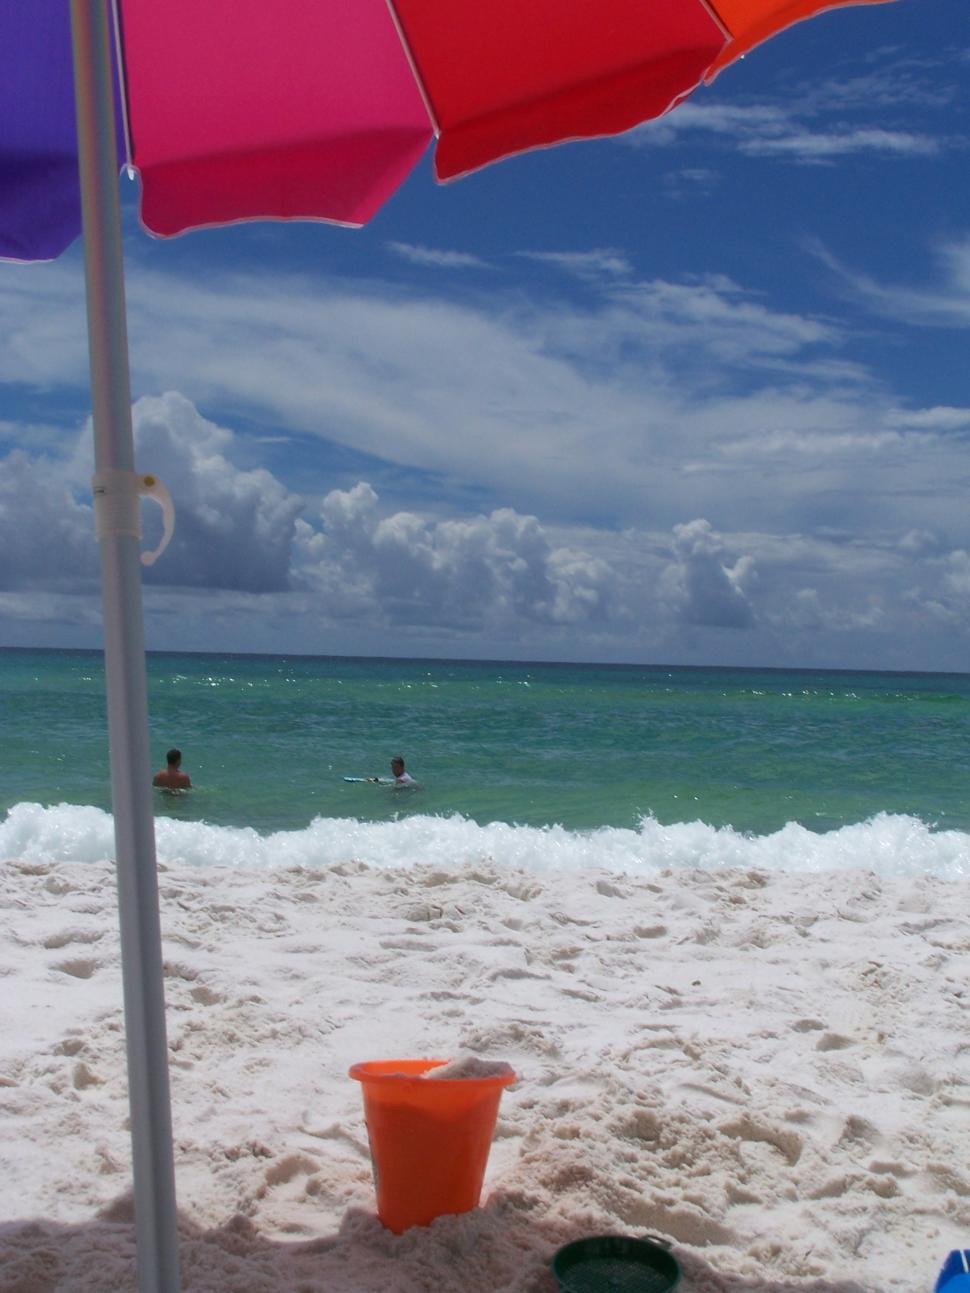 Free Image of Beach Umbrella and Buckets on Beach 